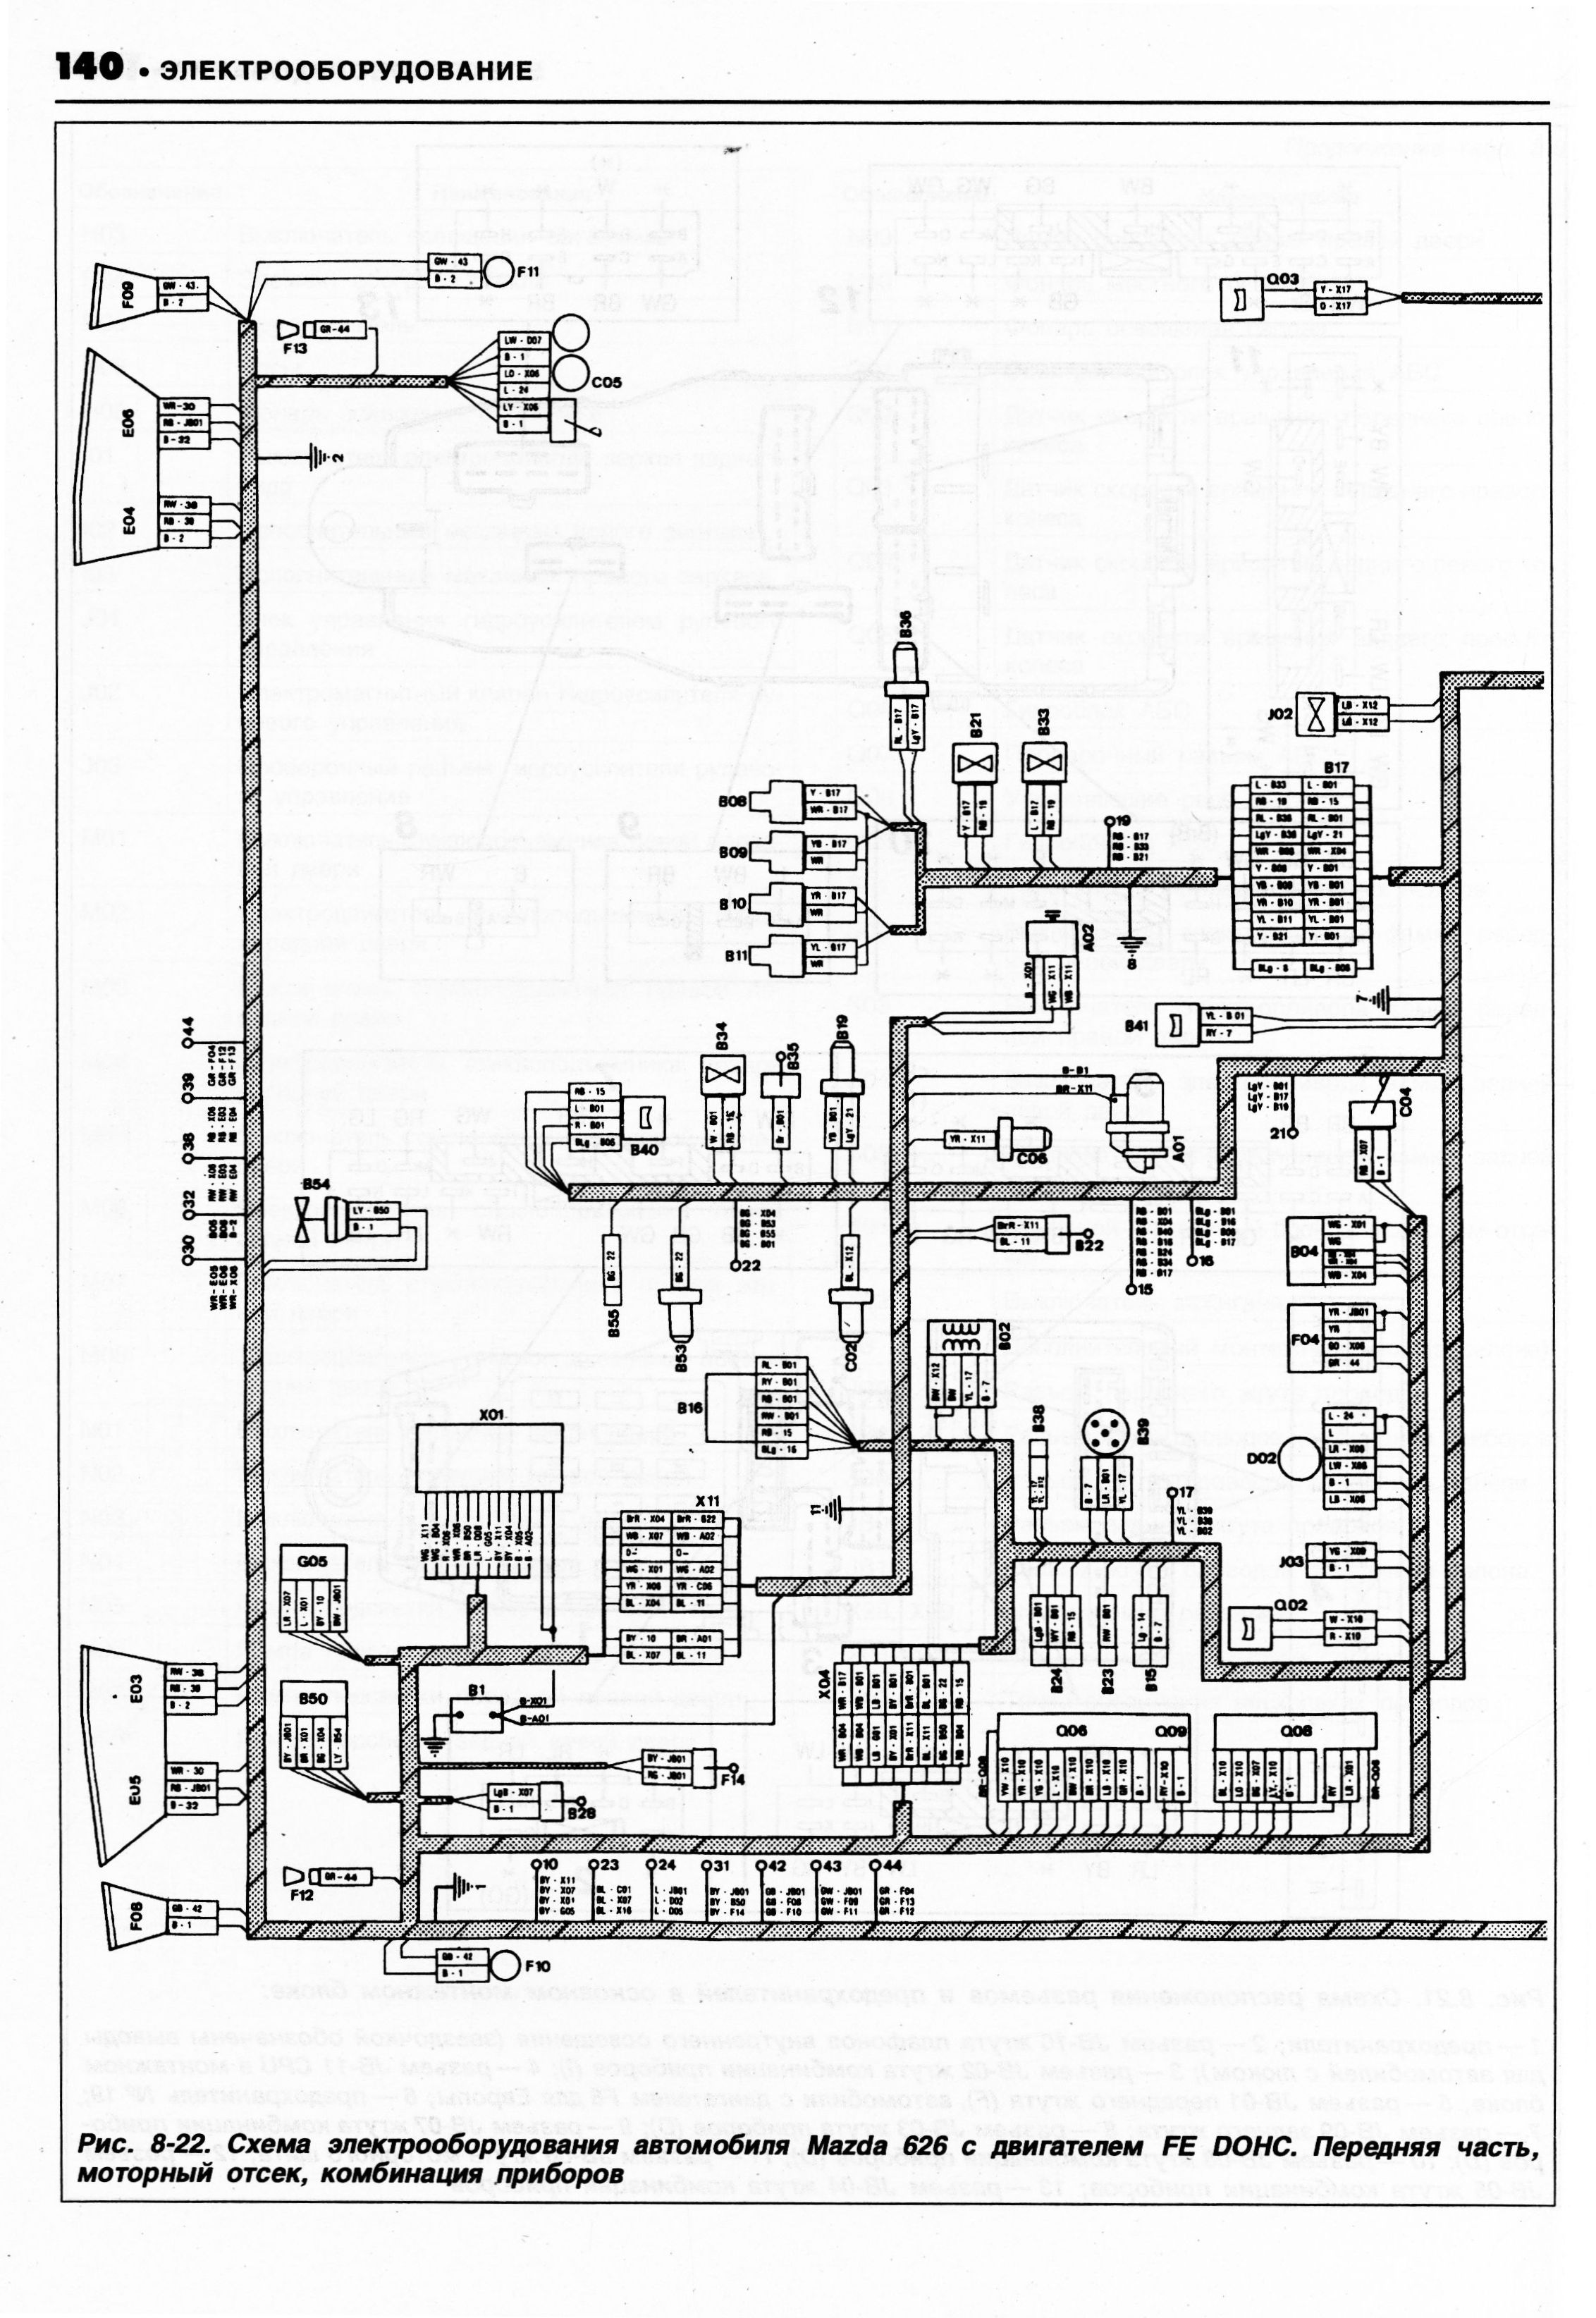 Электрические схемы мазда. Схема проводки Mazda 626 ge. Электрическая схема Мазда 626 1993г бензин. Мазда 626 электрические схемы. Электрические схемы Мазда 626 GD 2.0.